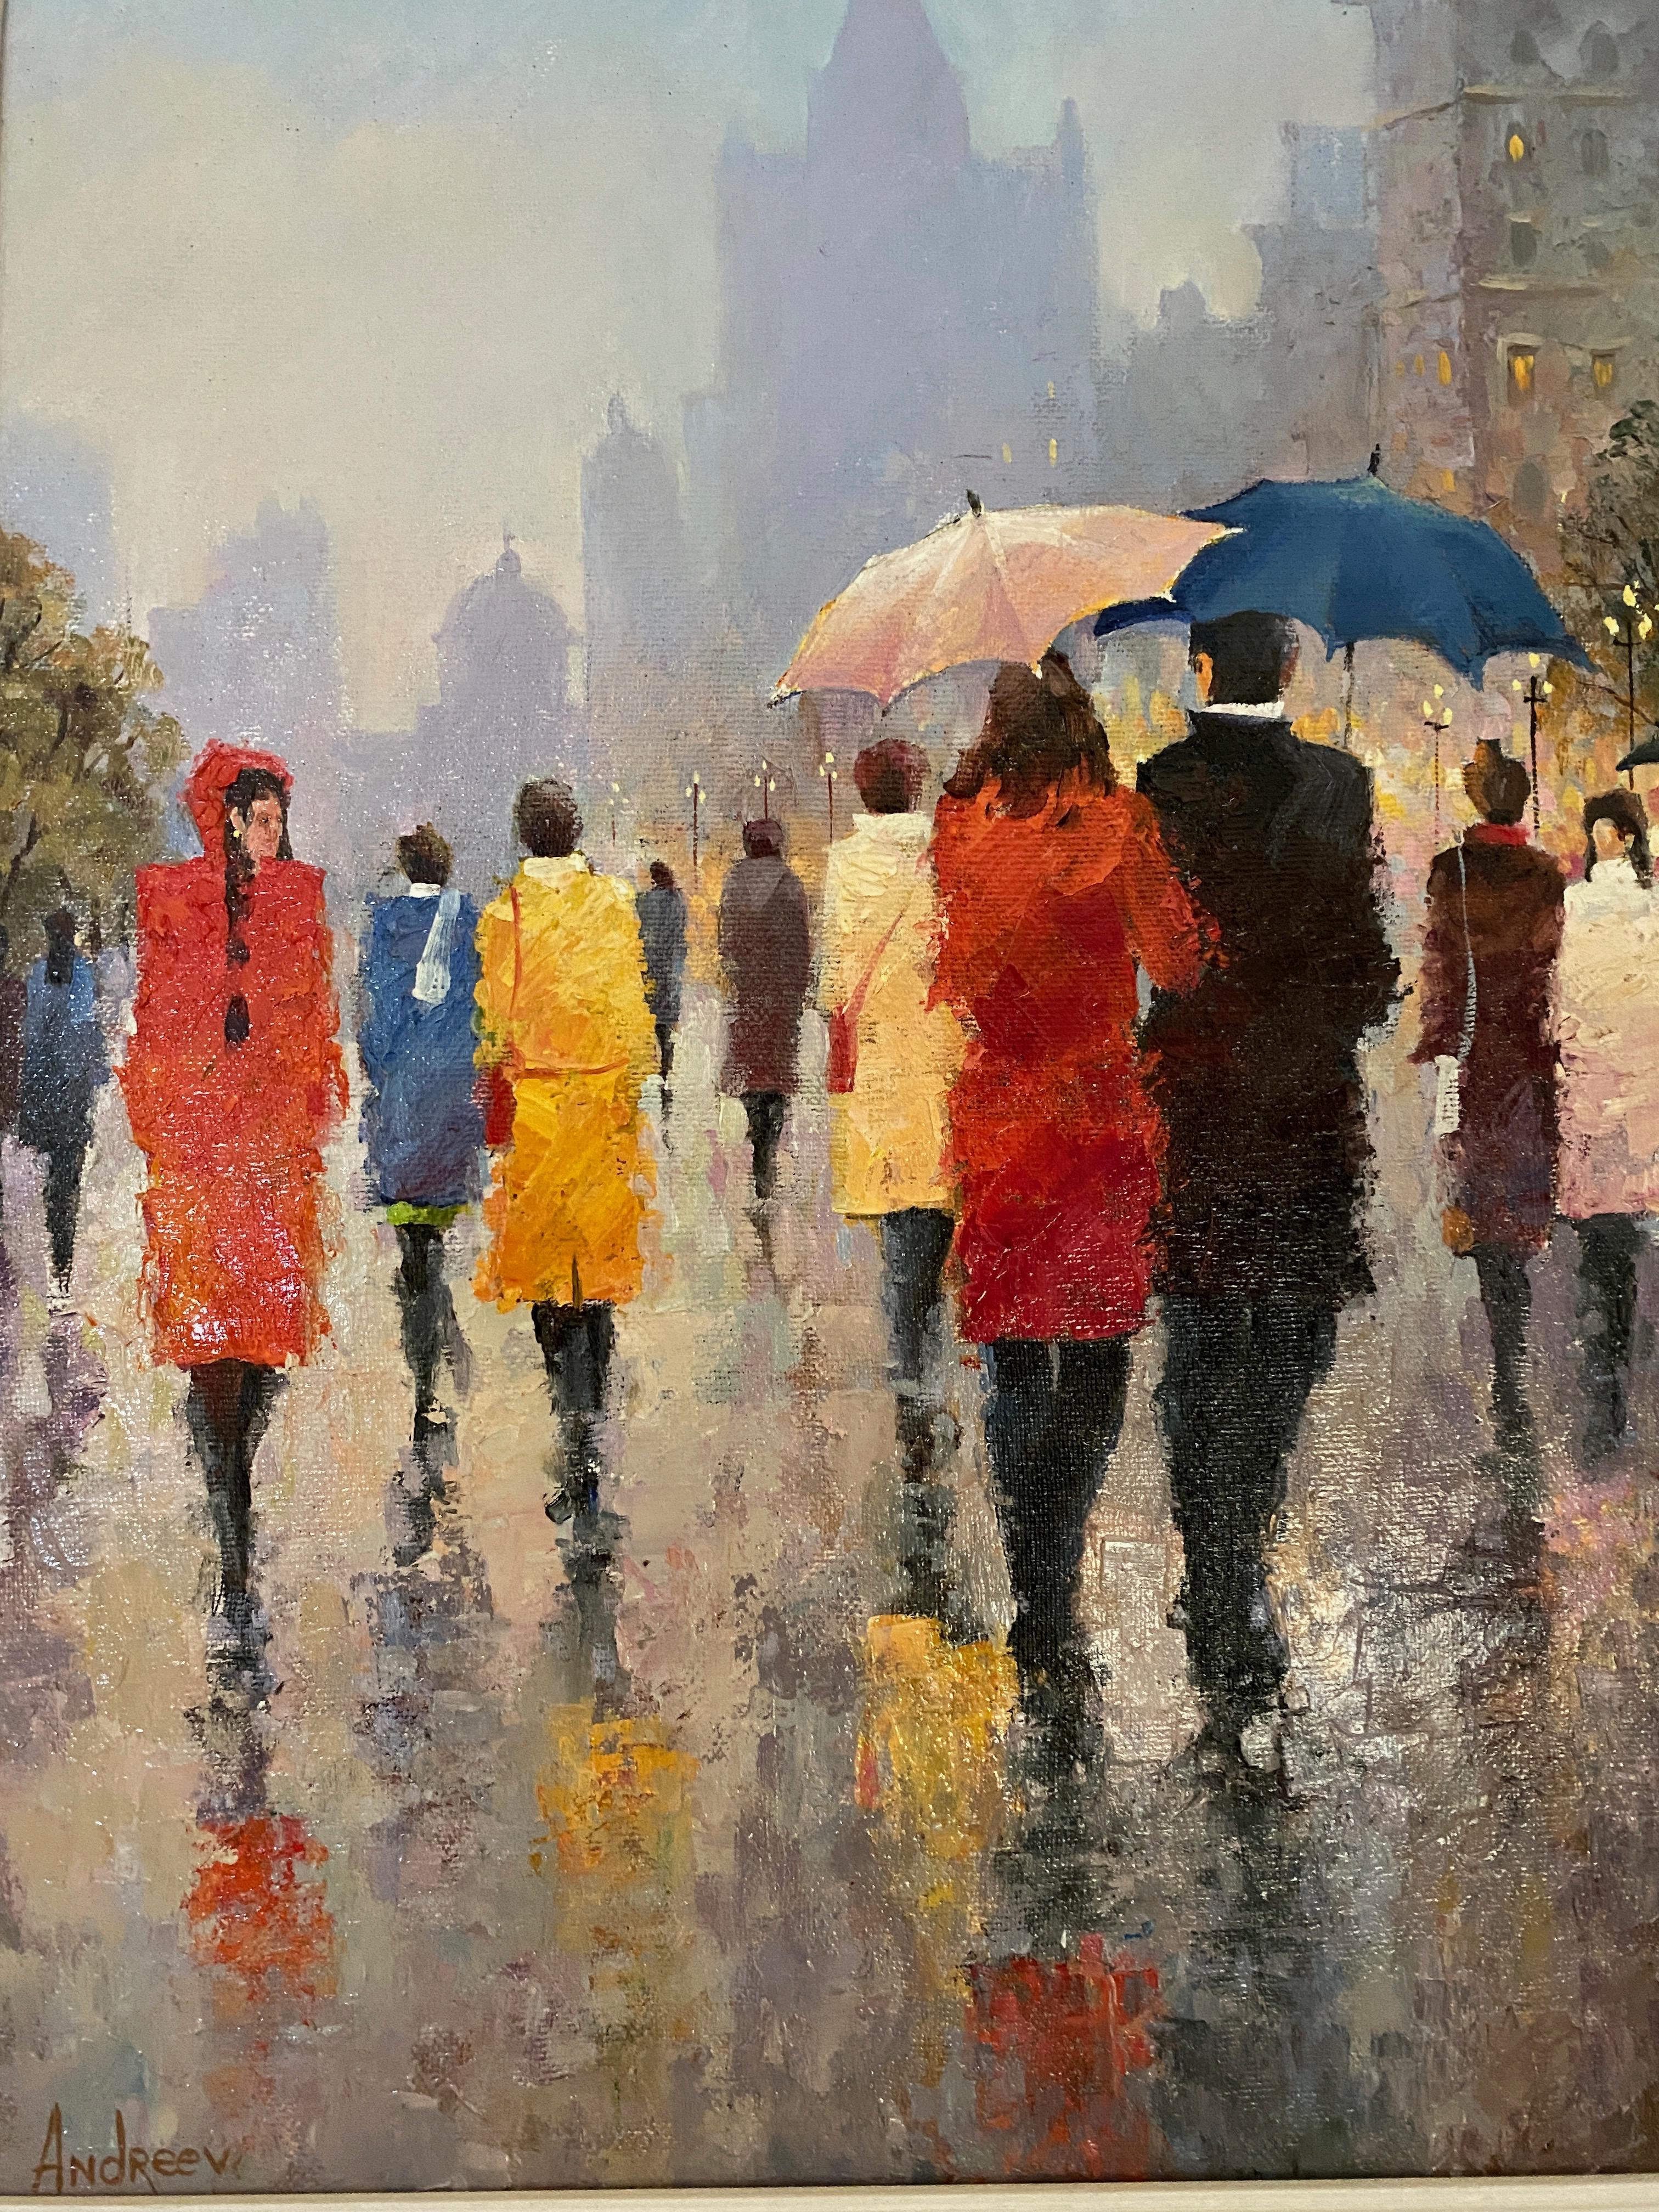 rainy street scene painting